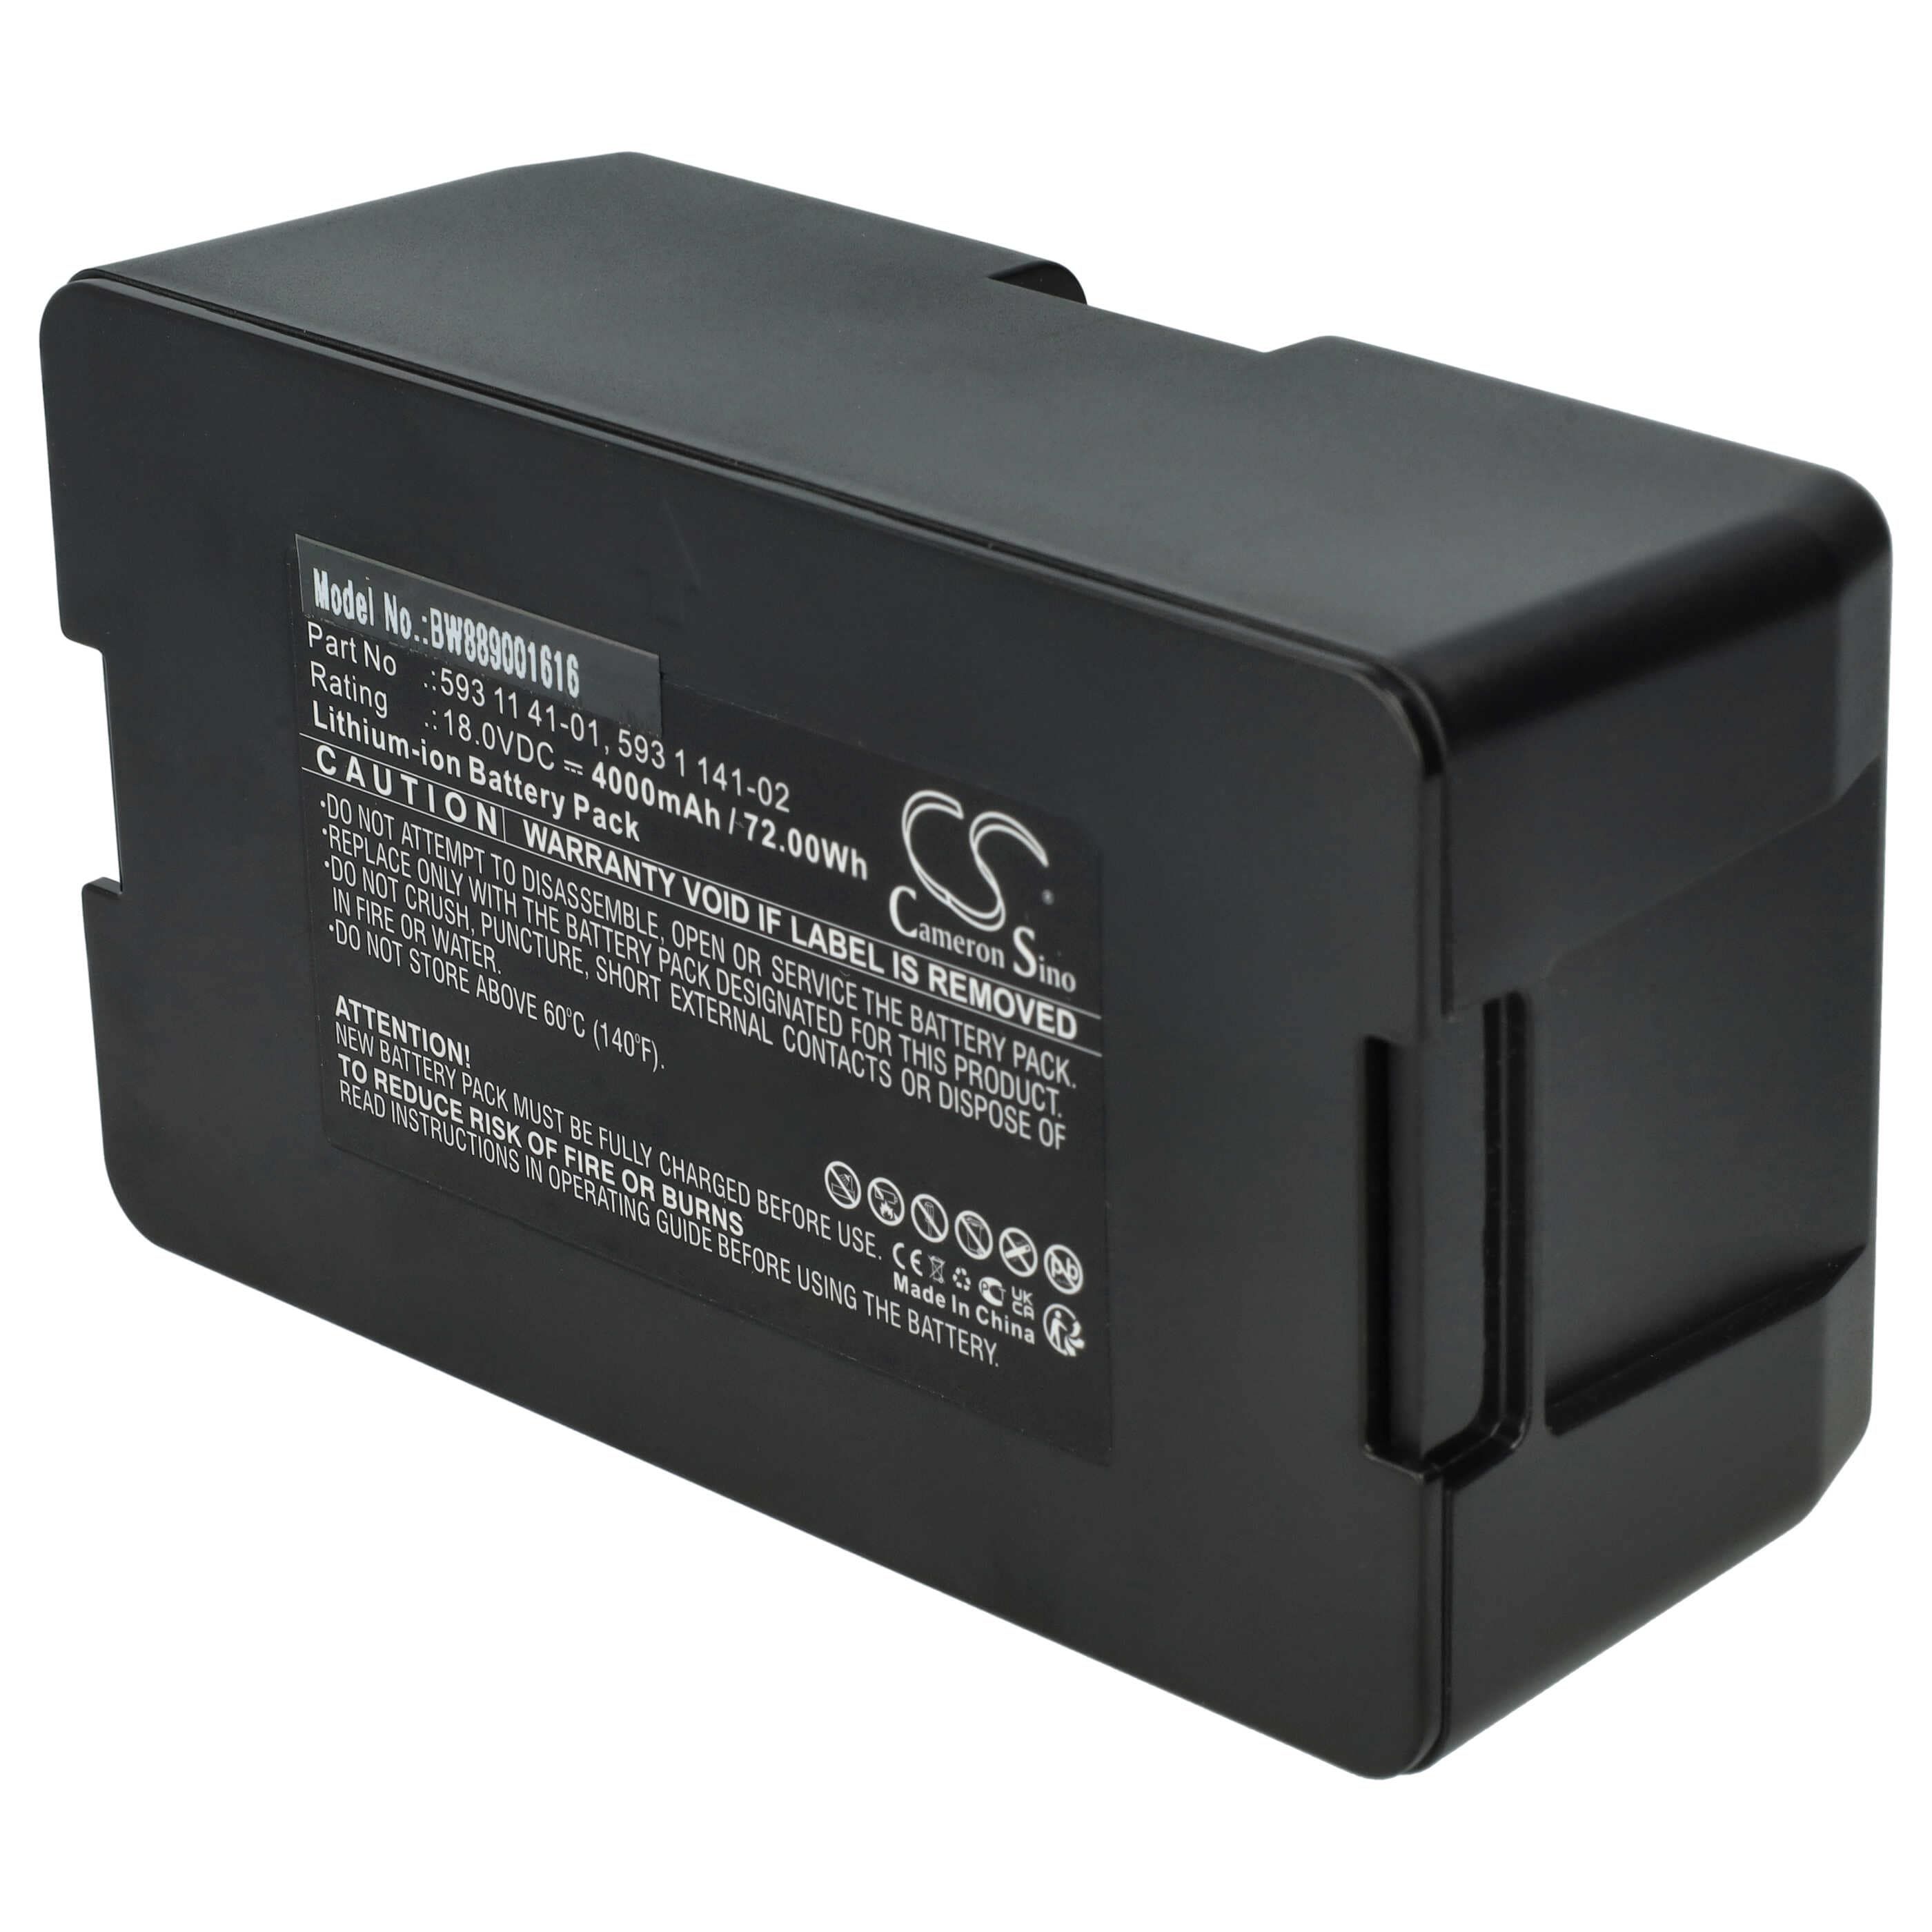 Lawnmower Battery Replacement for Husqvarna 593 1 141-02, 593 11 41-01 - 4000mAh 18V Li-Ion, black